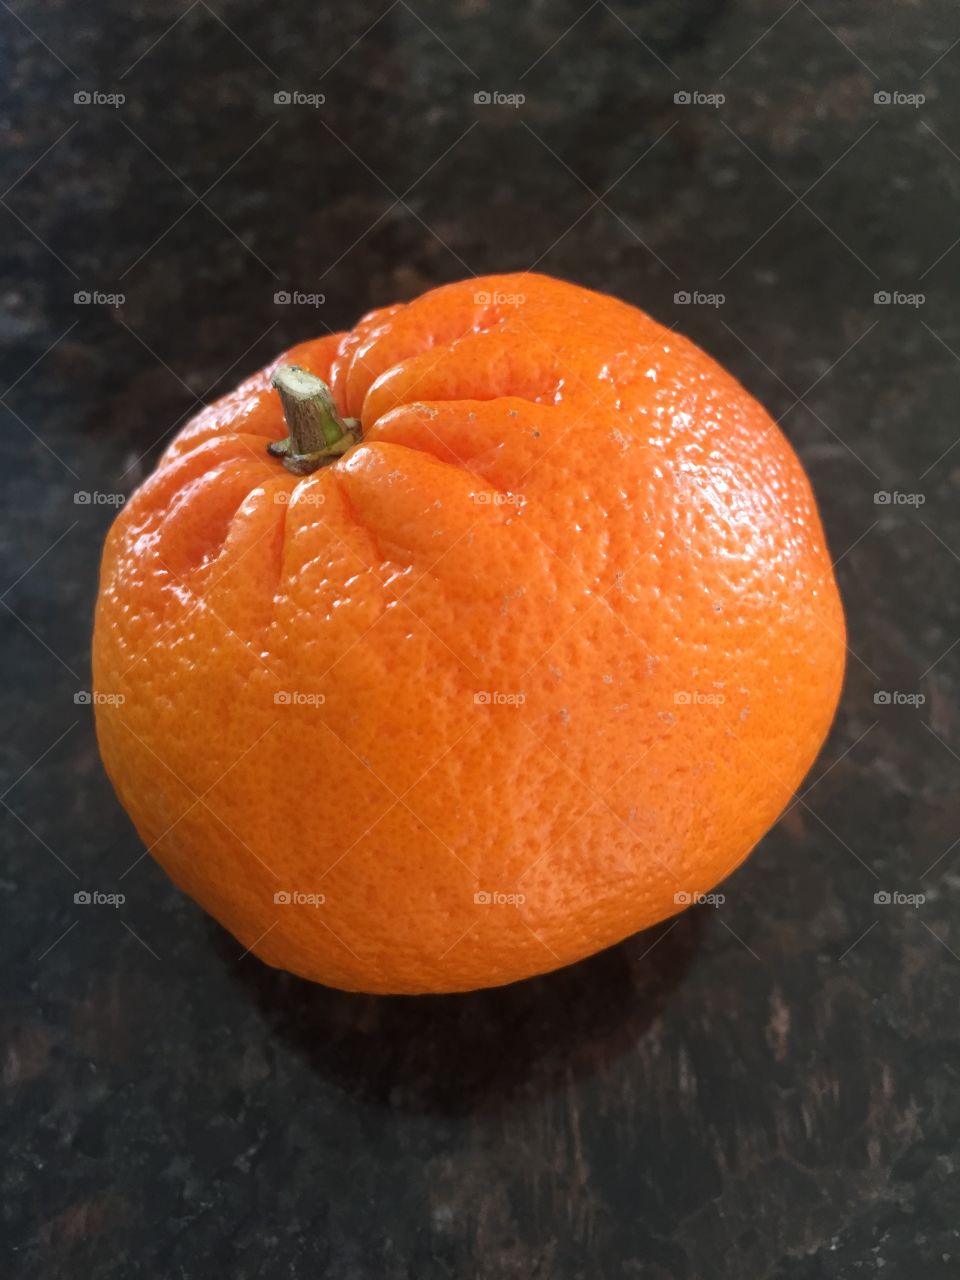 Yummy mandarin orange on black granite kitchen countertop. Three oranges a day keep doctor away? Maybe.